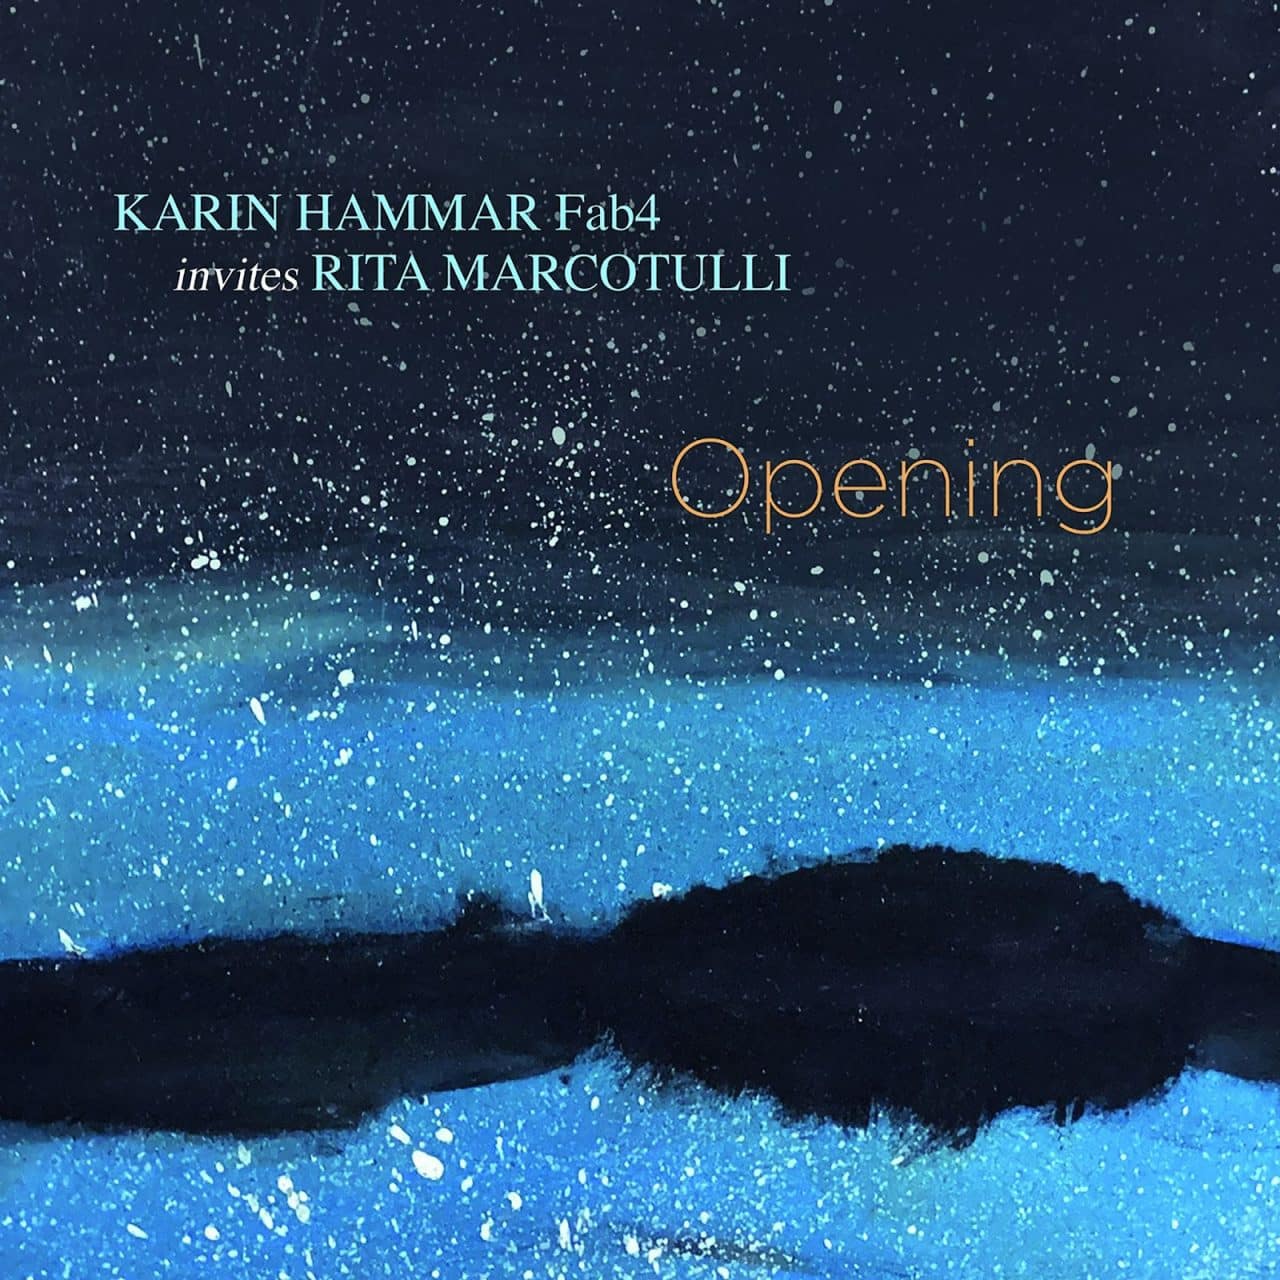 Karin Hammar Fab4 invites Rita Marcotulli / Opening